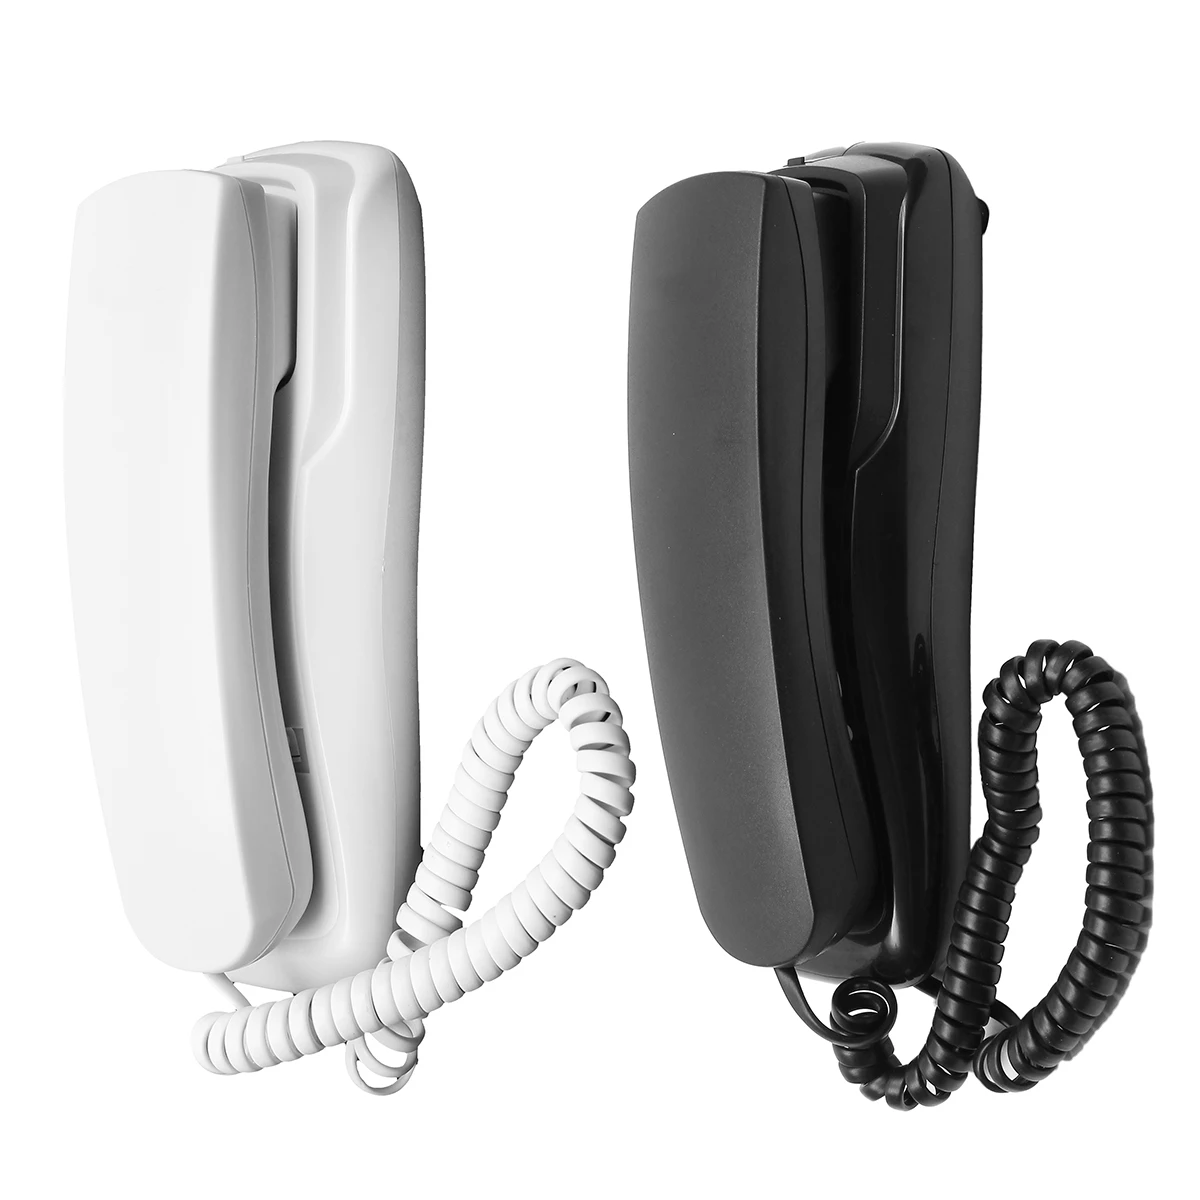 

Mini Wall Telephone corded telephone Home Office Hotel Desktop Landline Phone White/Black Volume control DC 48V